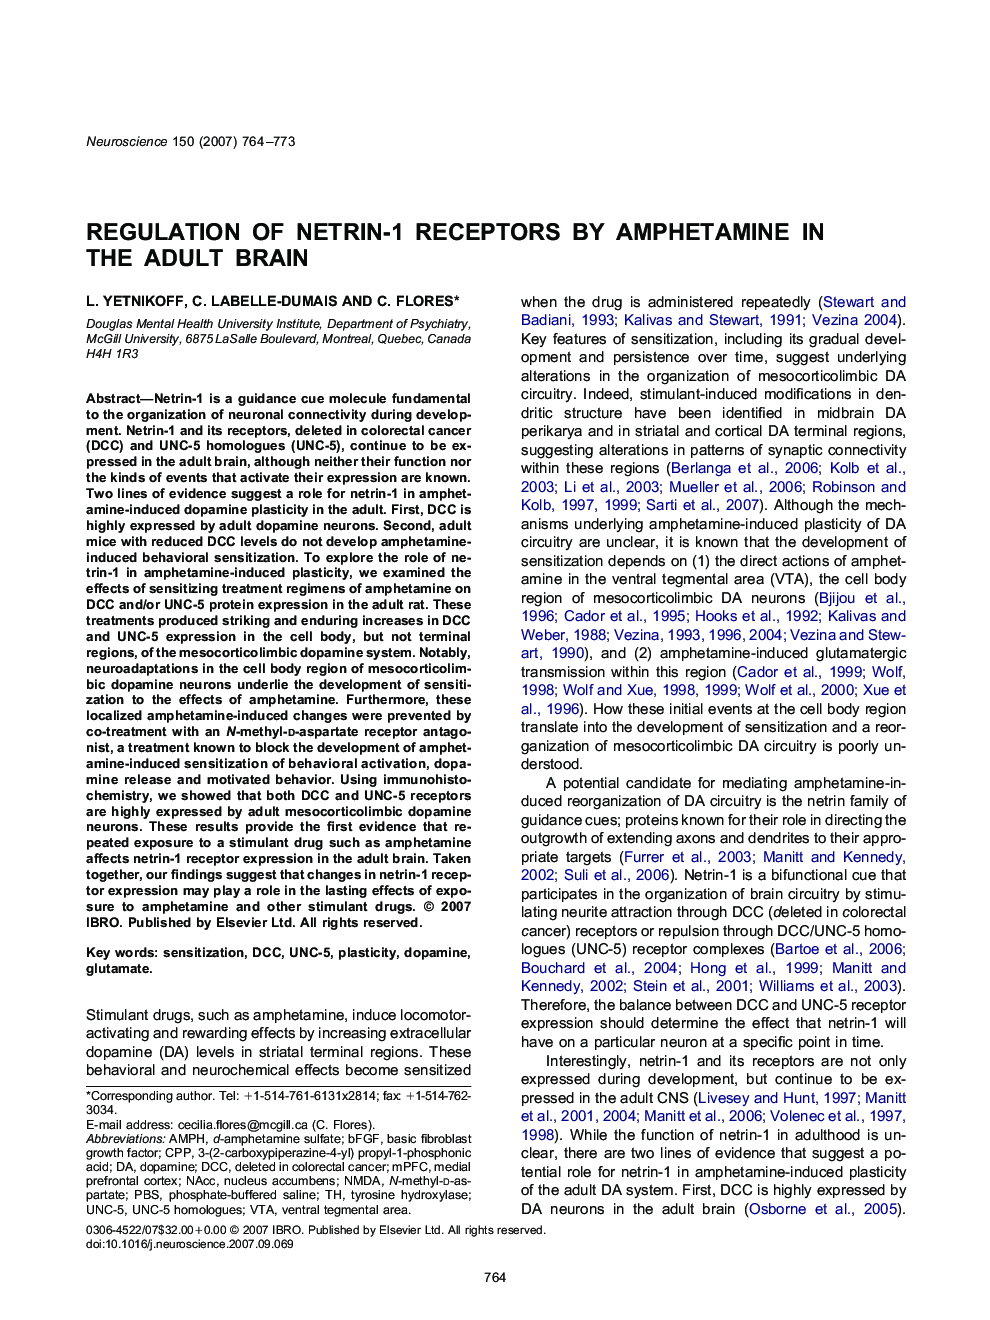 Regulation of netrin-1 receptors by amphetamine in the adult brain